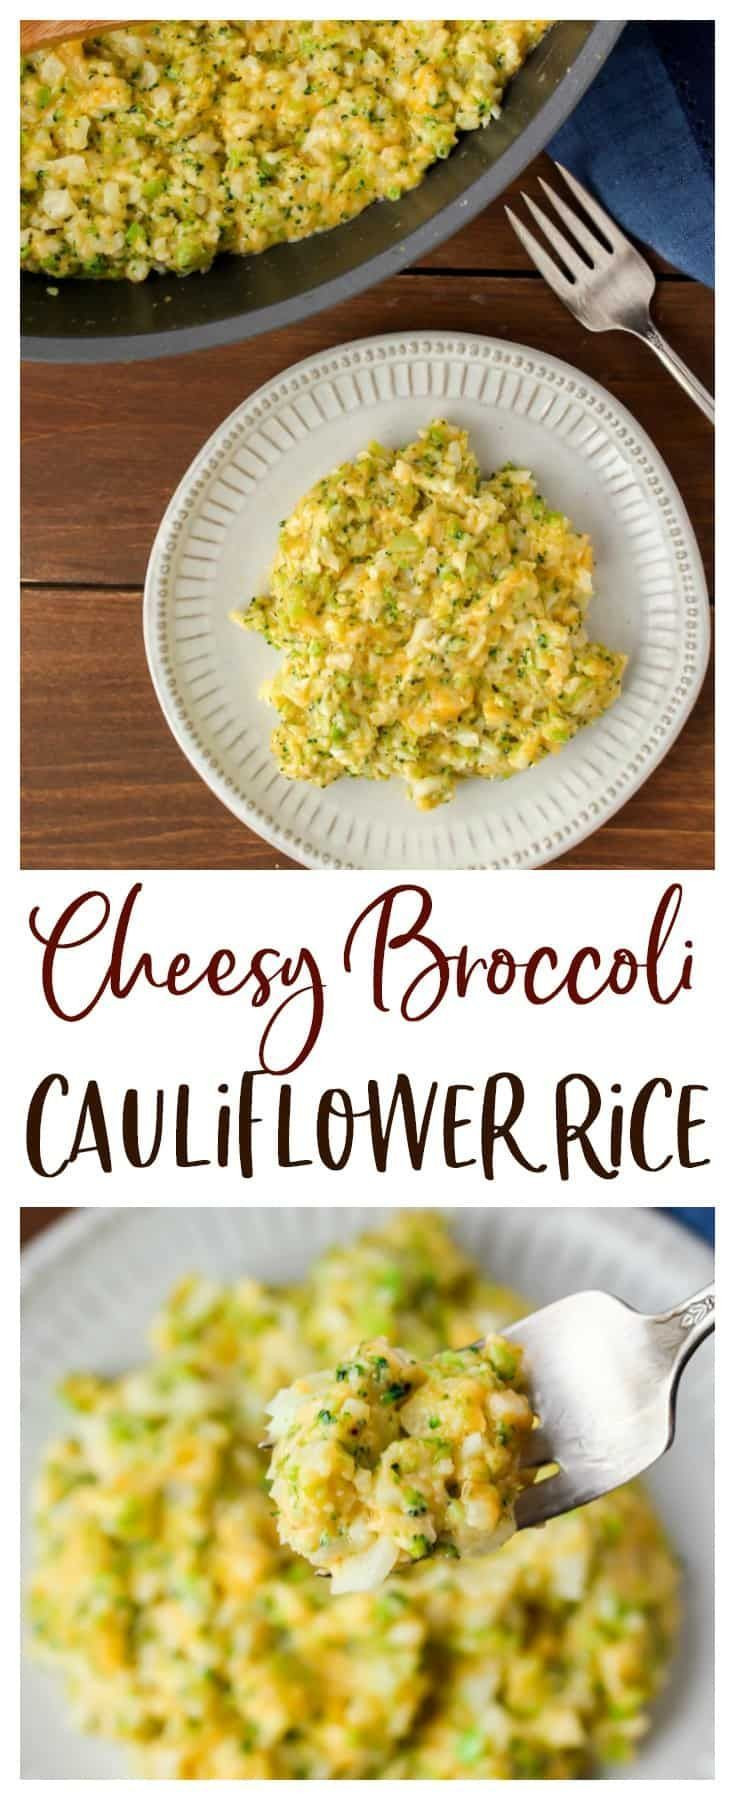 Cheesy Riced Cauliflower Keto
 Cheesy Broccoli Cauliflower Rice an easy keto side dish